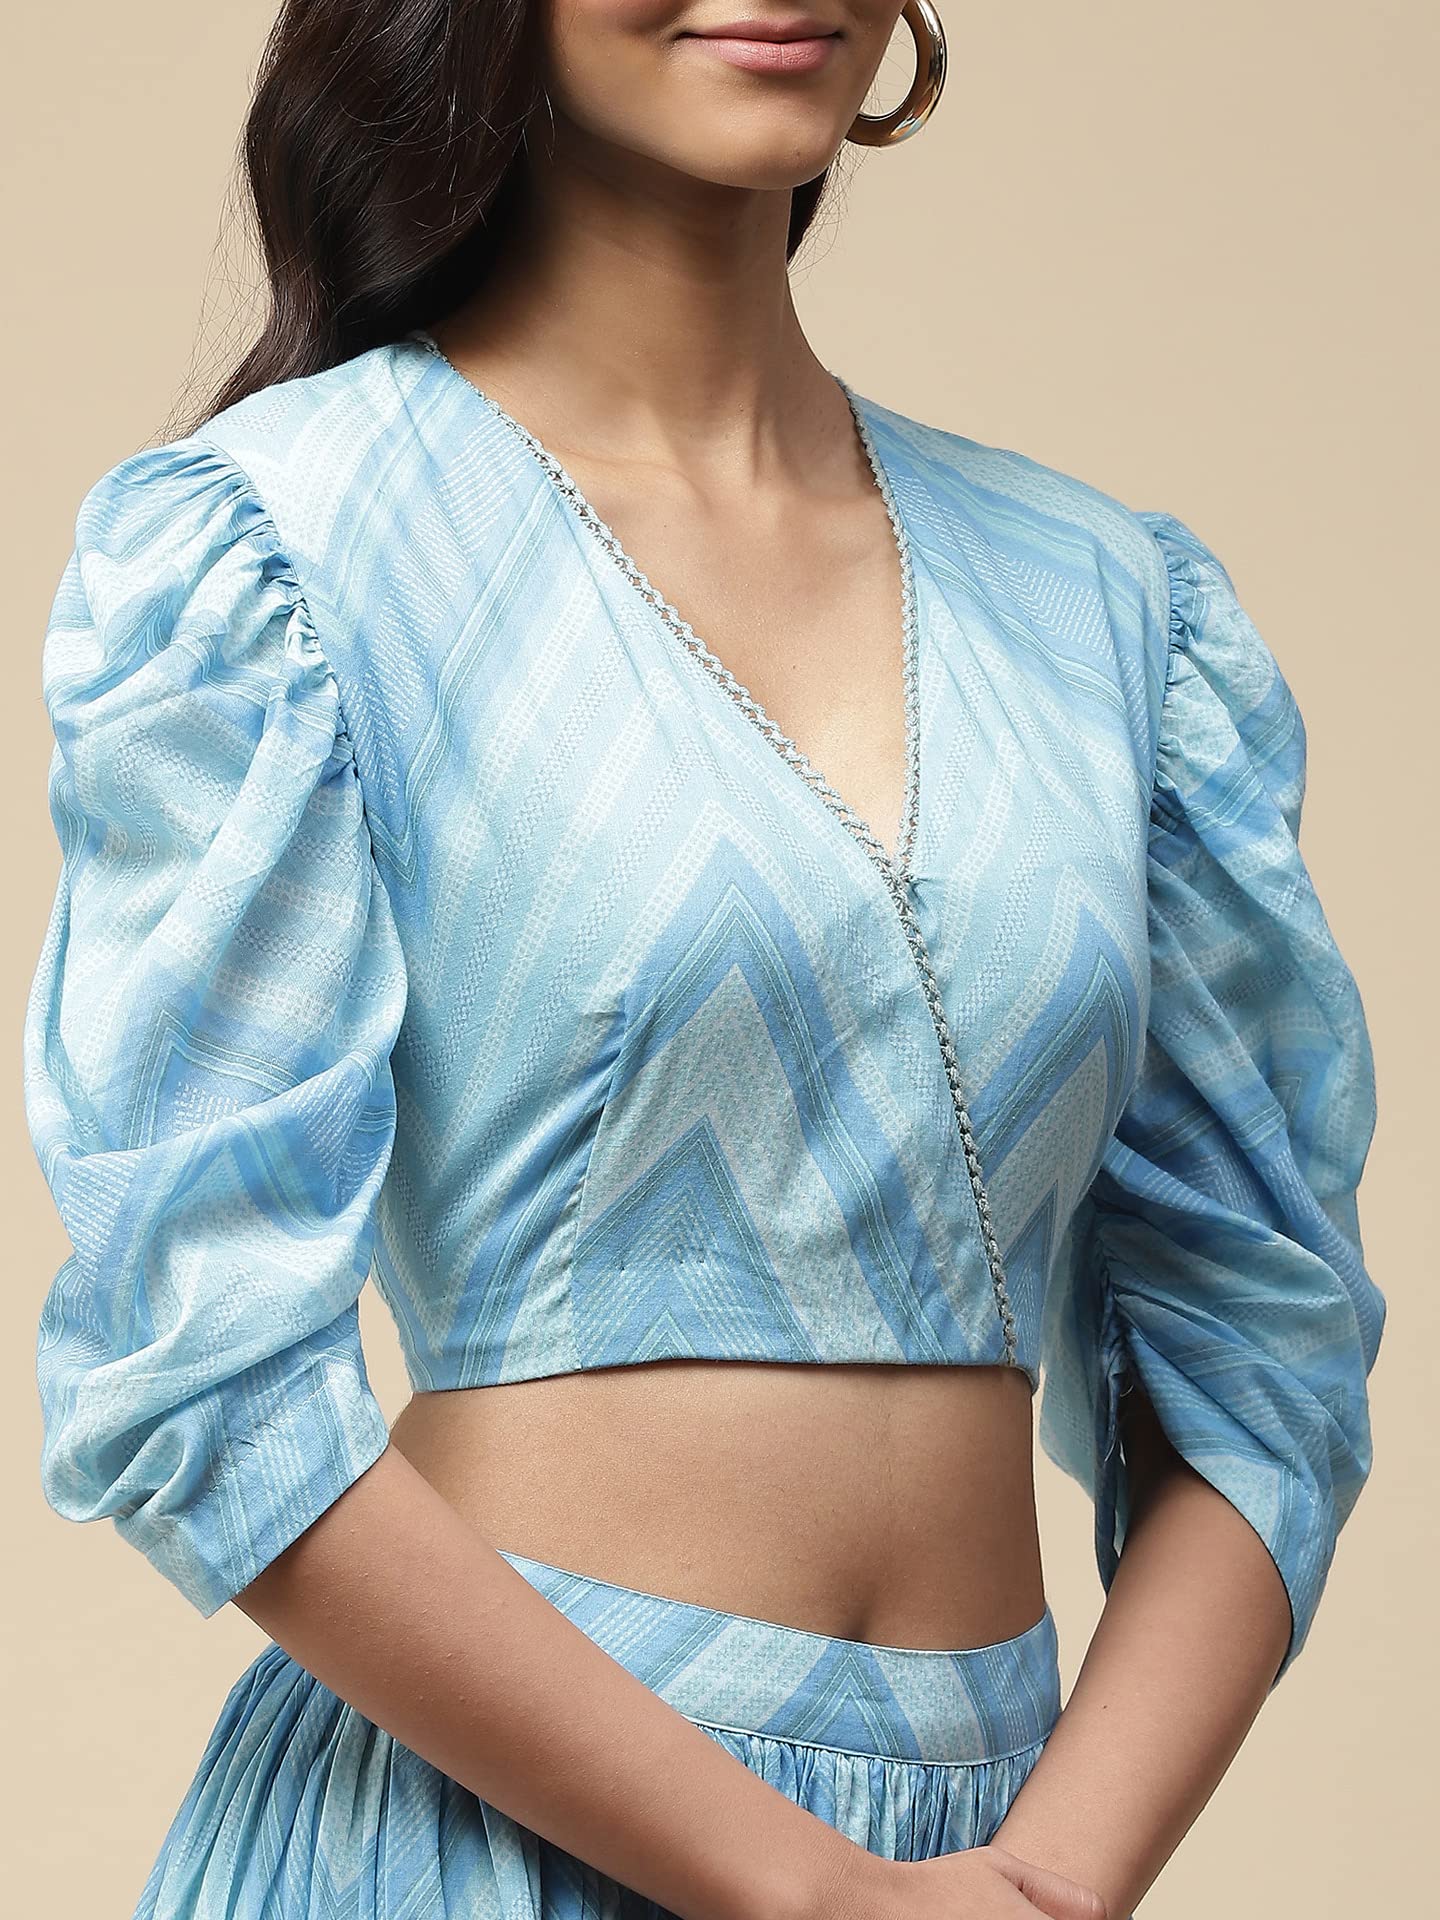 Aarke Ritu Kumar Blue Chevron Stripe Top with Skirt 